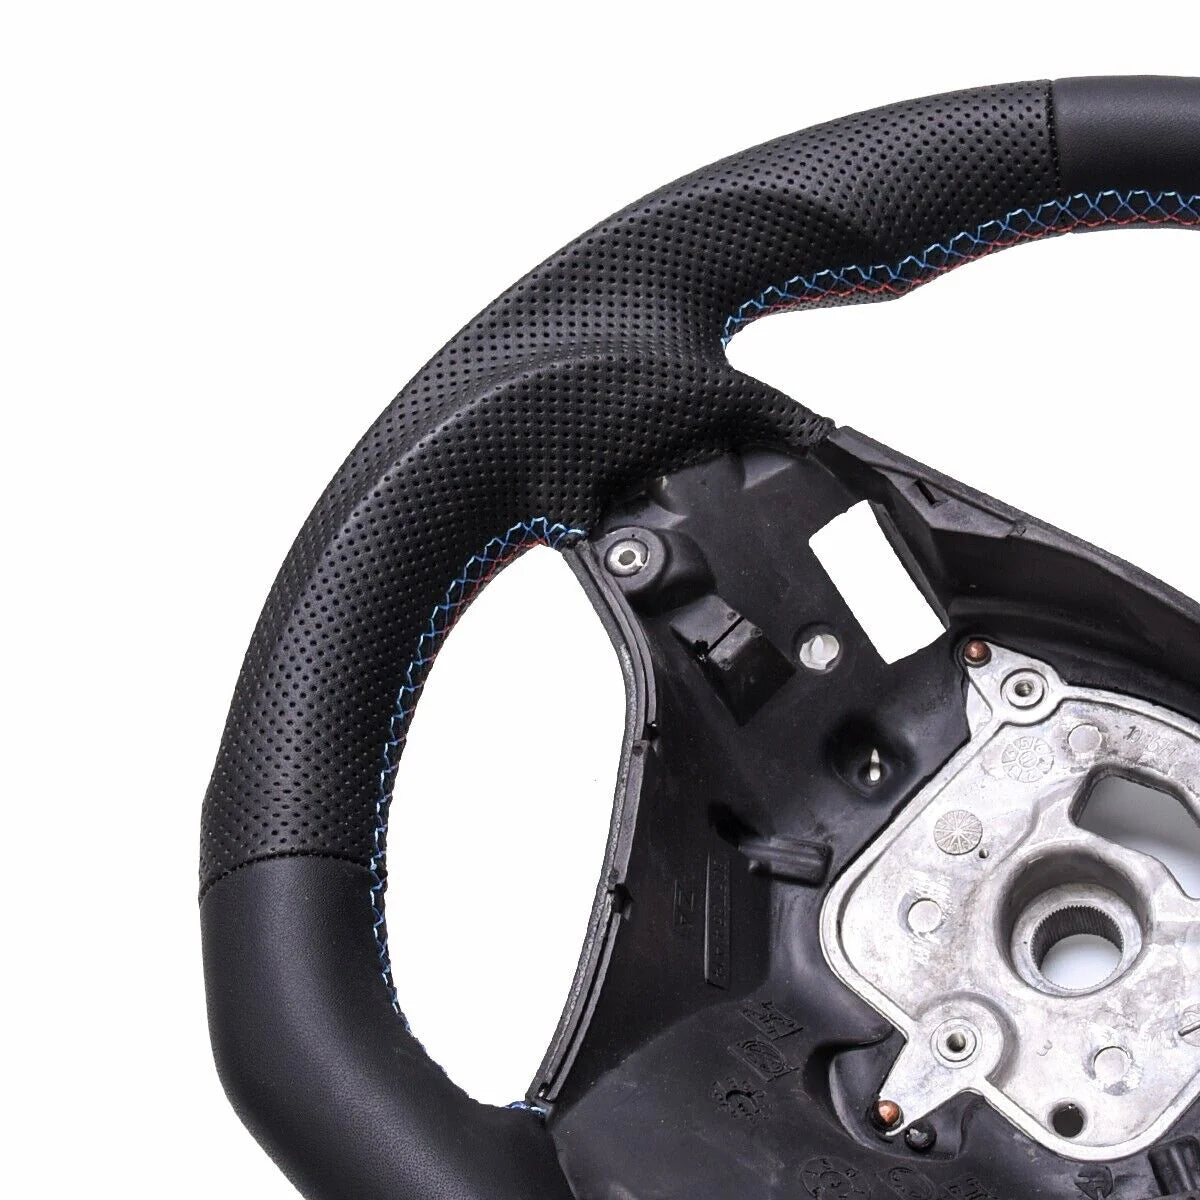 Leather Steering Wheel for BMW E82 E90 E92